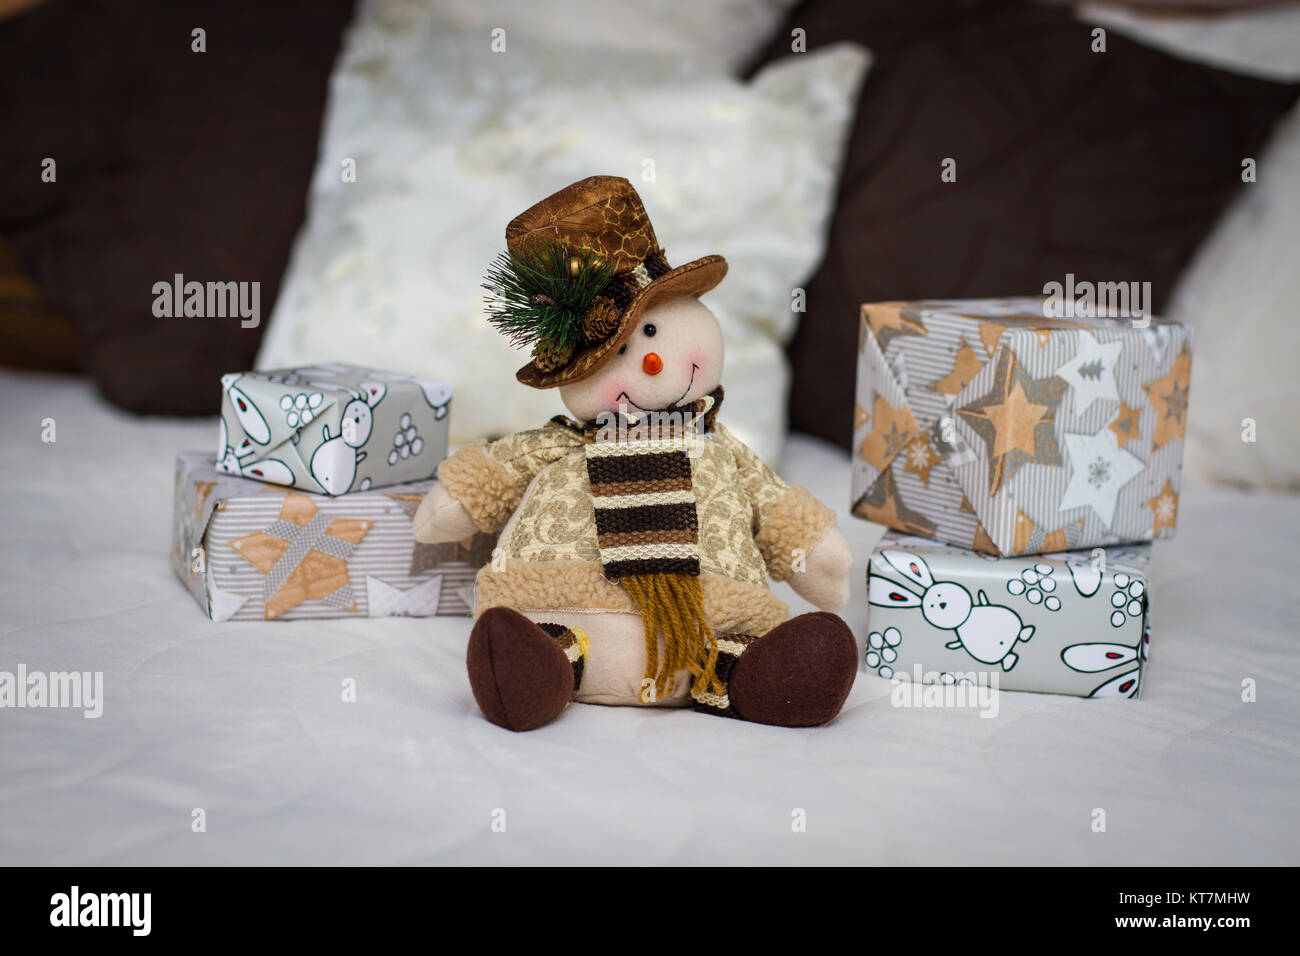 Snowman. Christmas decoration with Christmas toys Stock Photo